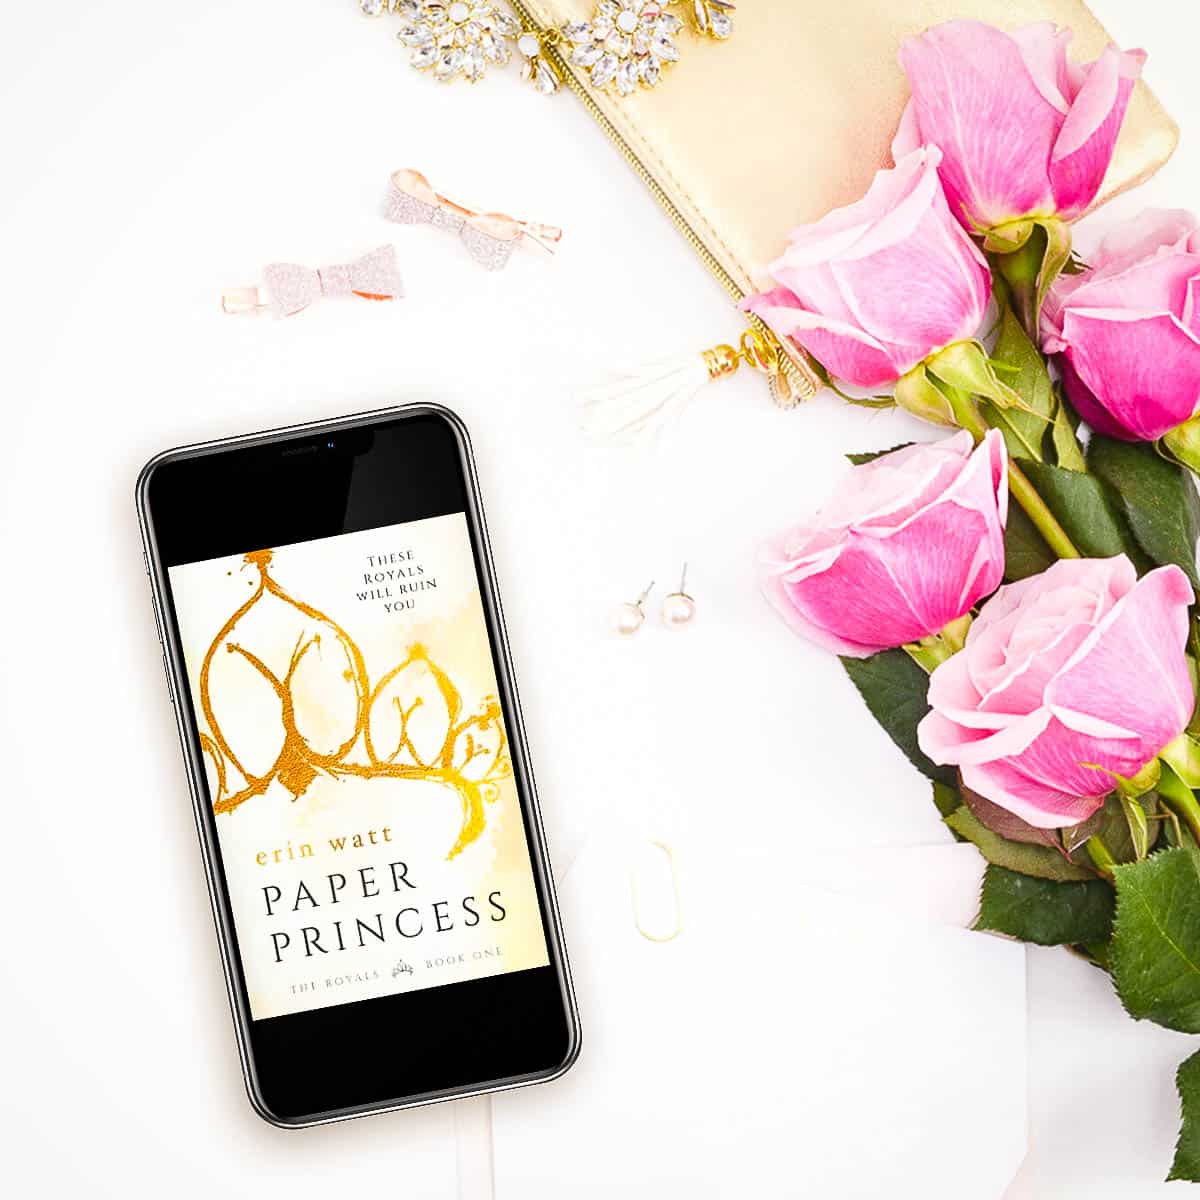 Paper Princess by Erin Watt – The Royals Book 1